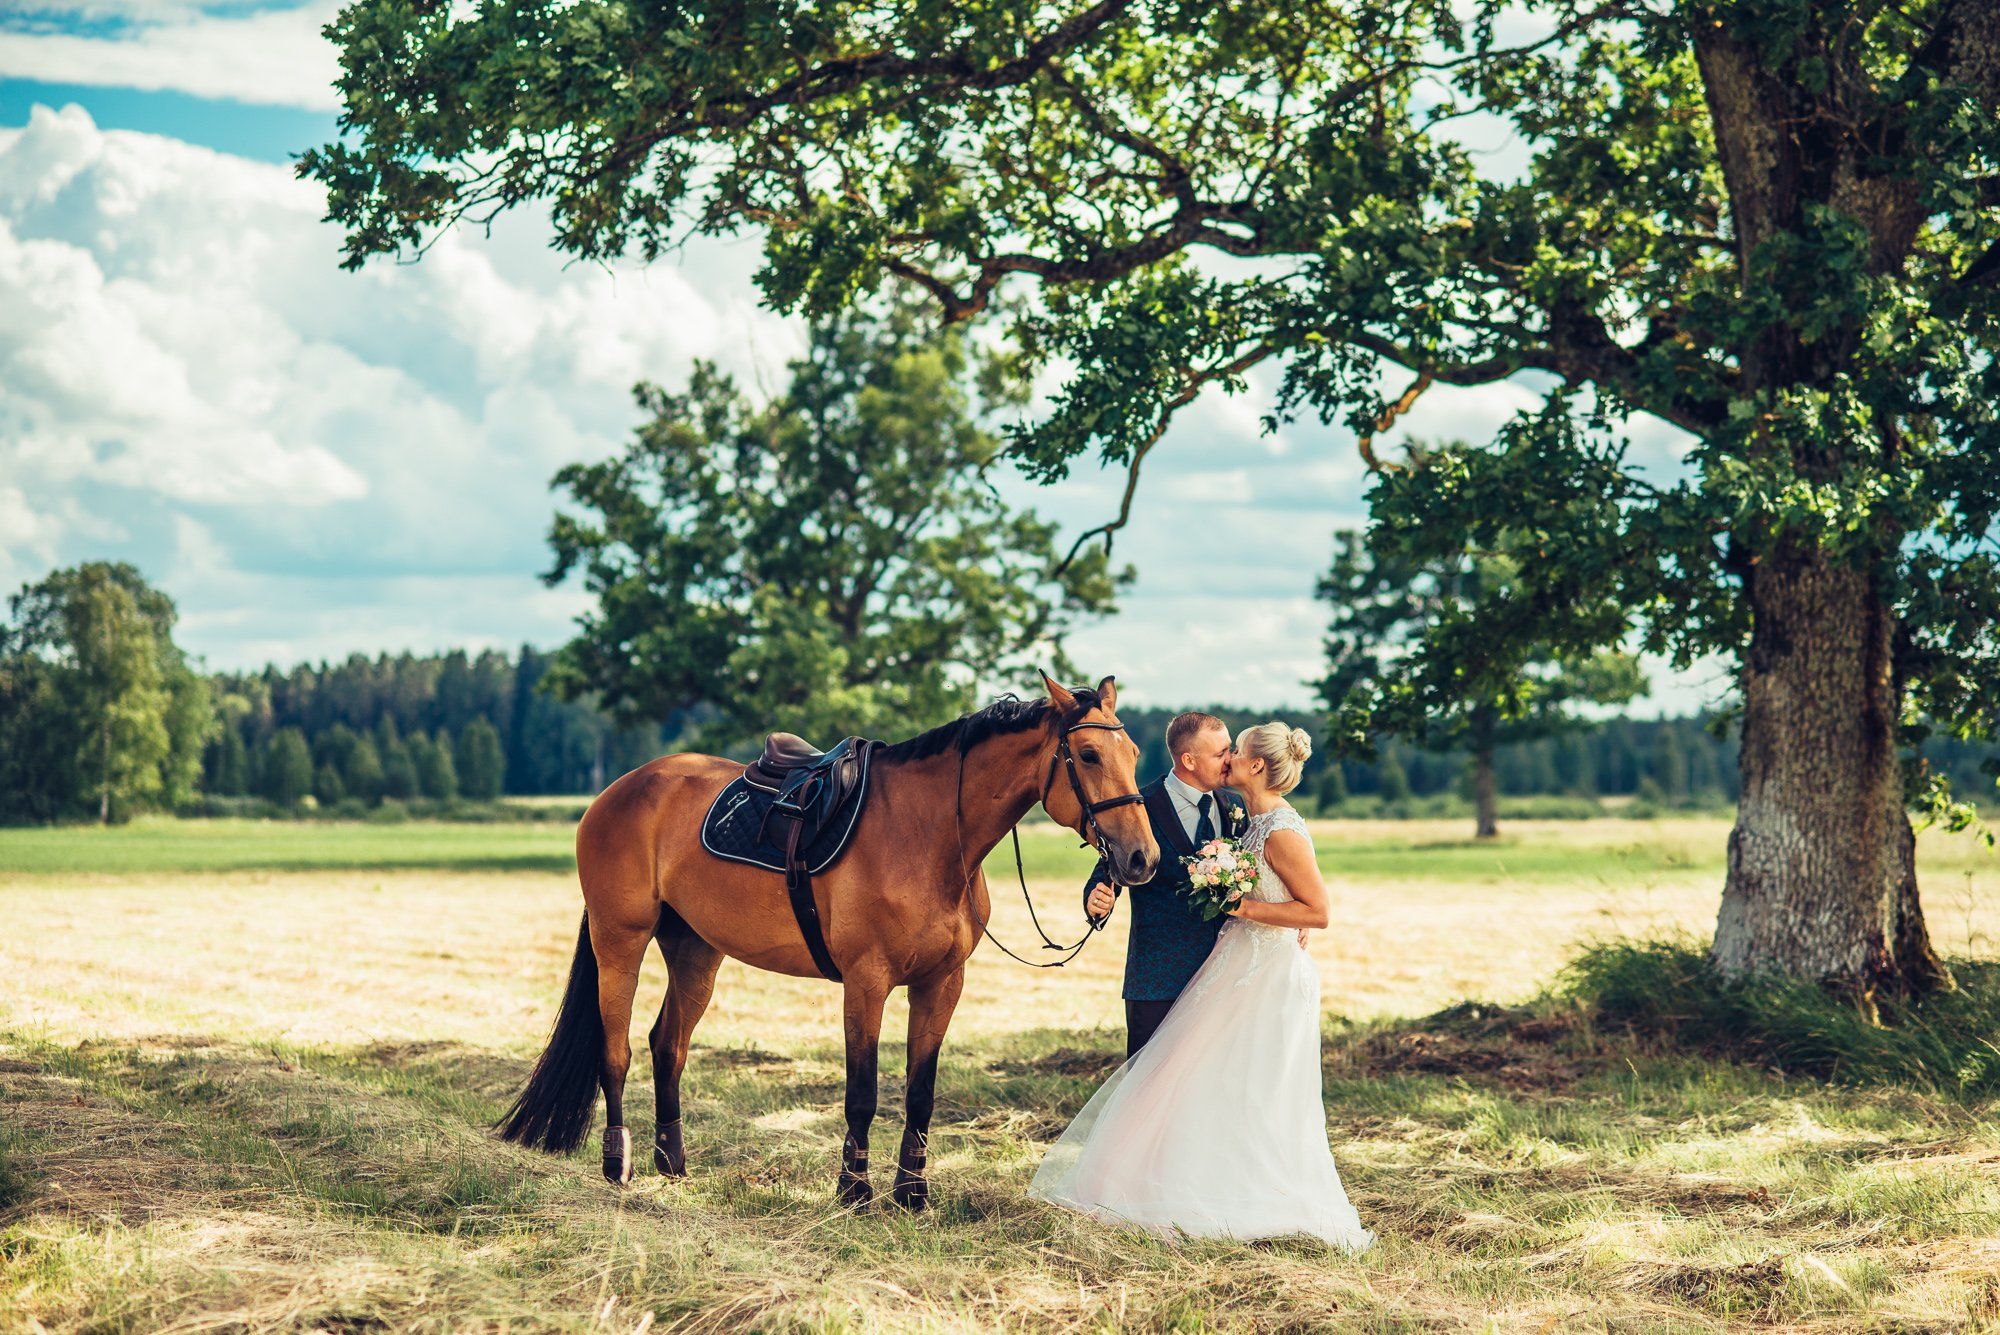 #horse #weddings #love, Roberts Blaubuks